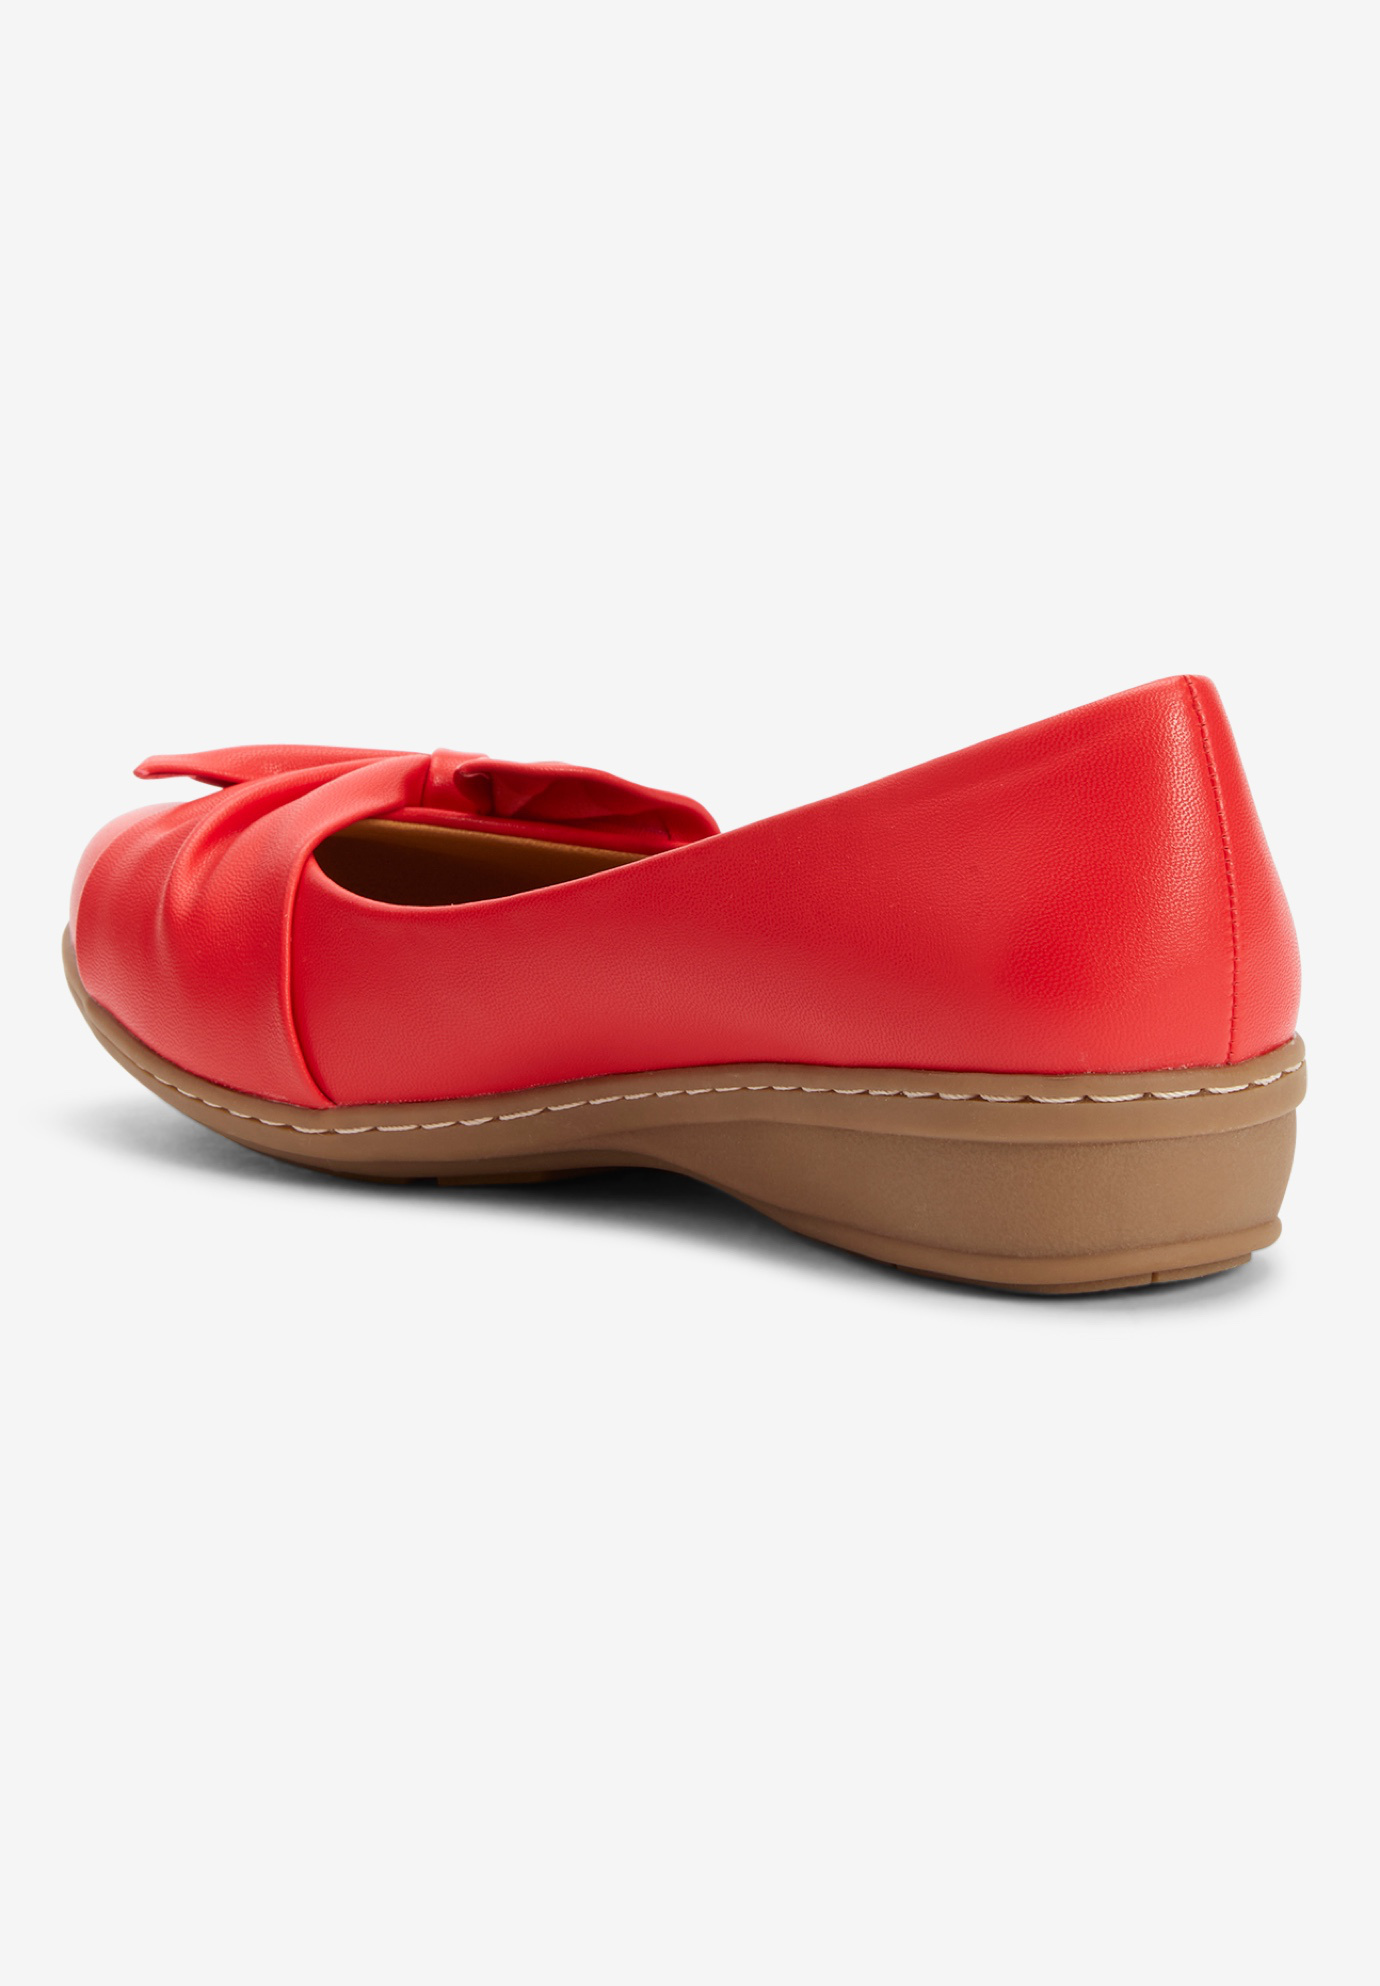 Comfortview Women's Wide Width The Pamela Slip On Flat Loafer Shoes - image 3 of 7